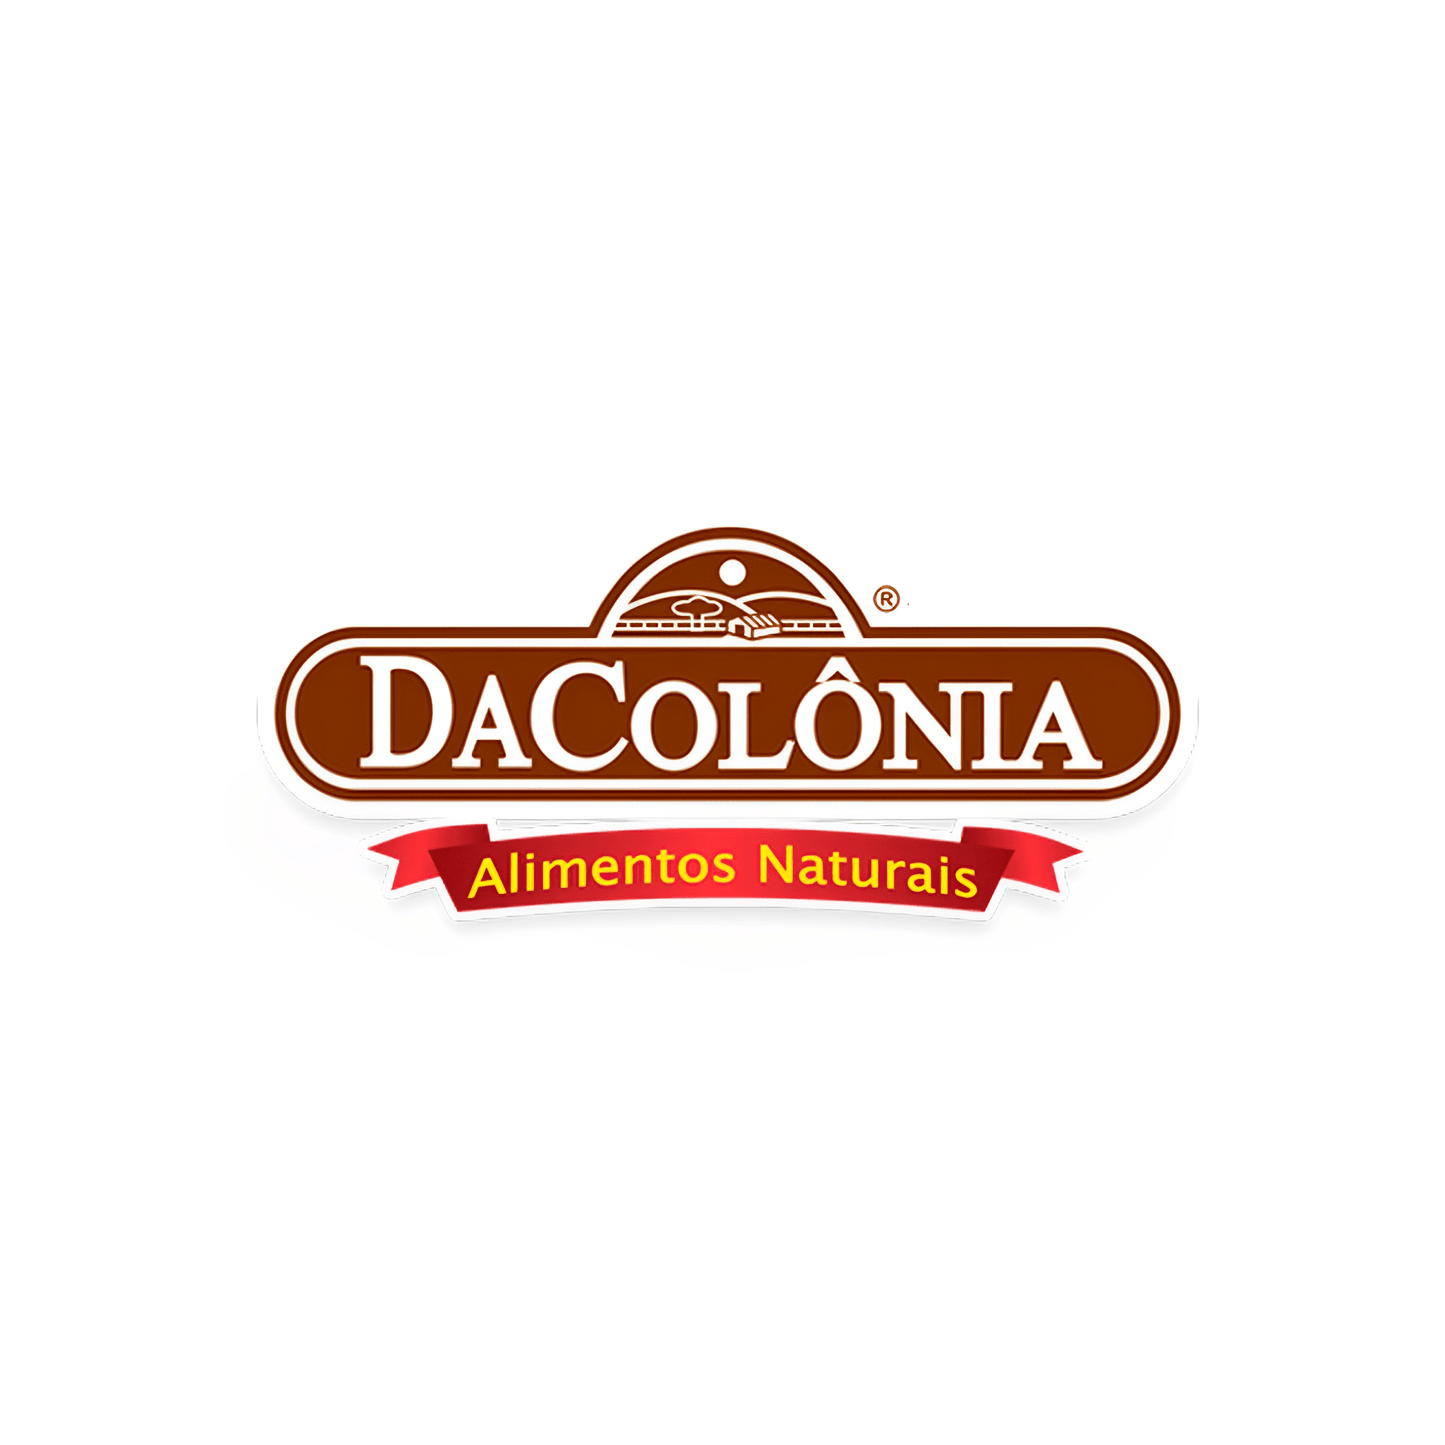 DaColônia Pé de Moleque Crunchy Bucket 25.18 oz. (714g) - Brazilian Shop